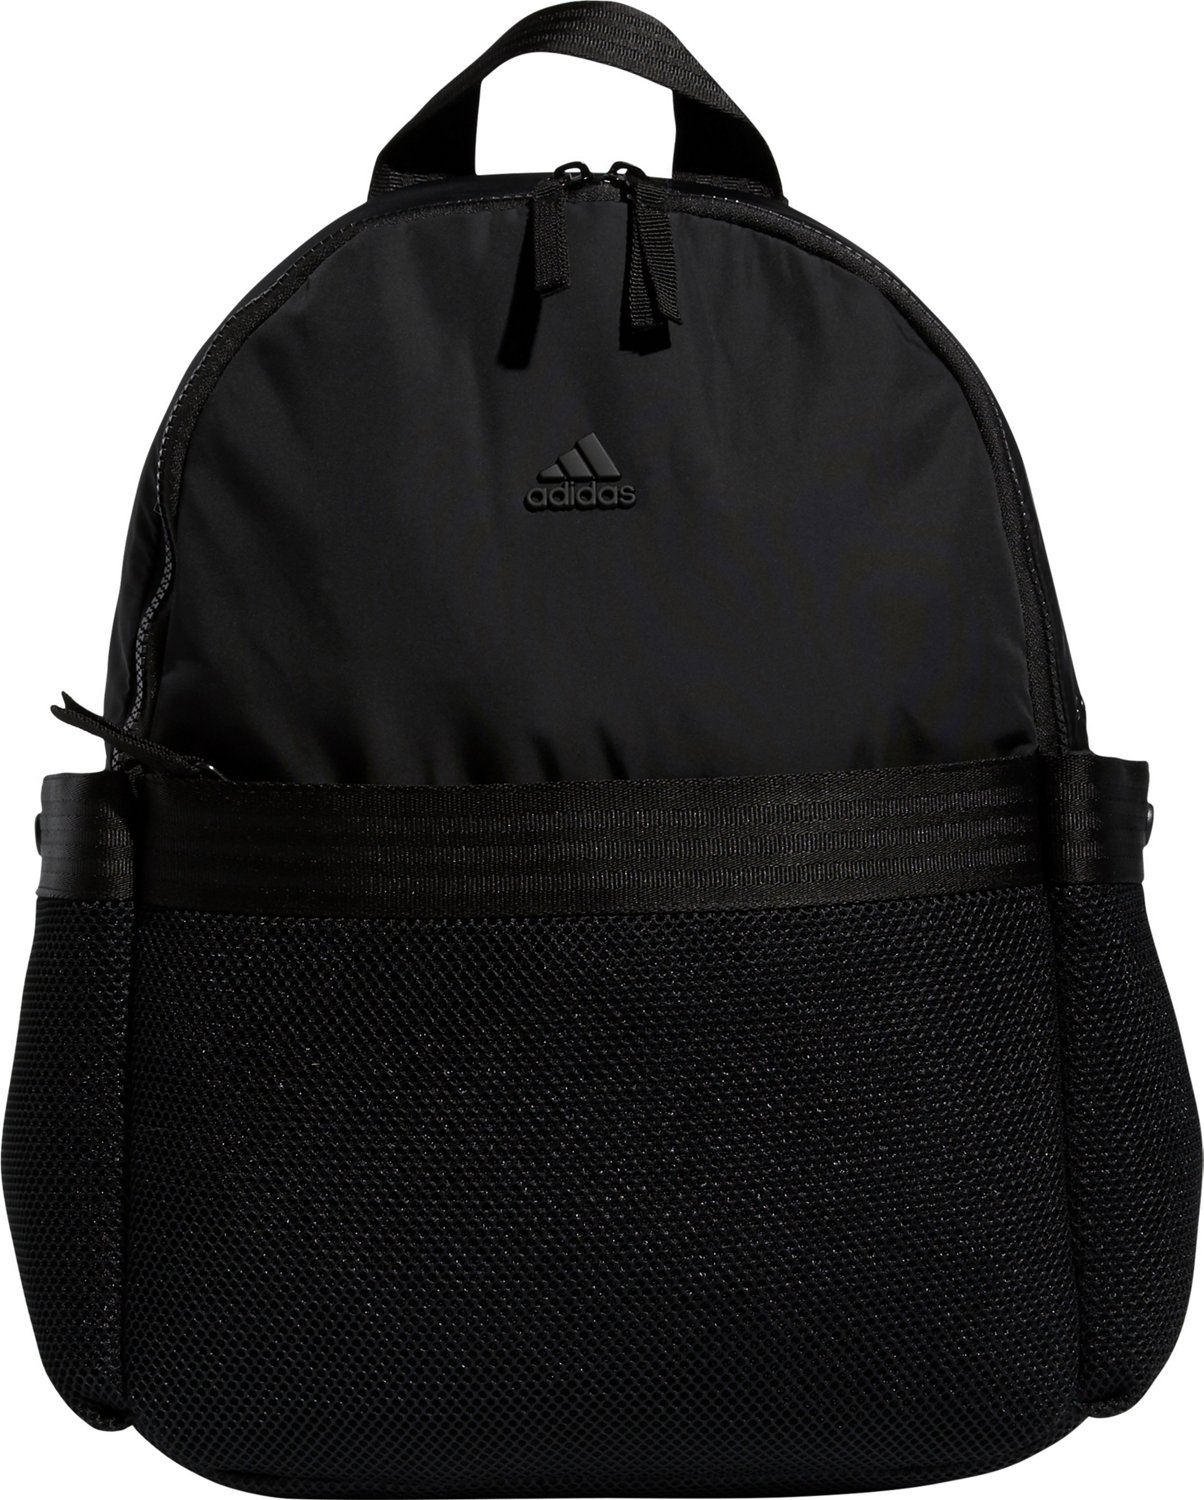 adidas VFA III Backpack | Free Shipping at Academy